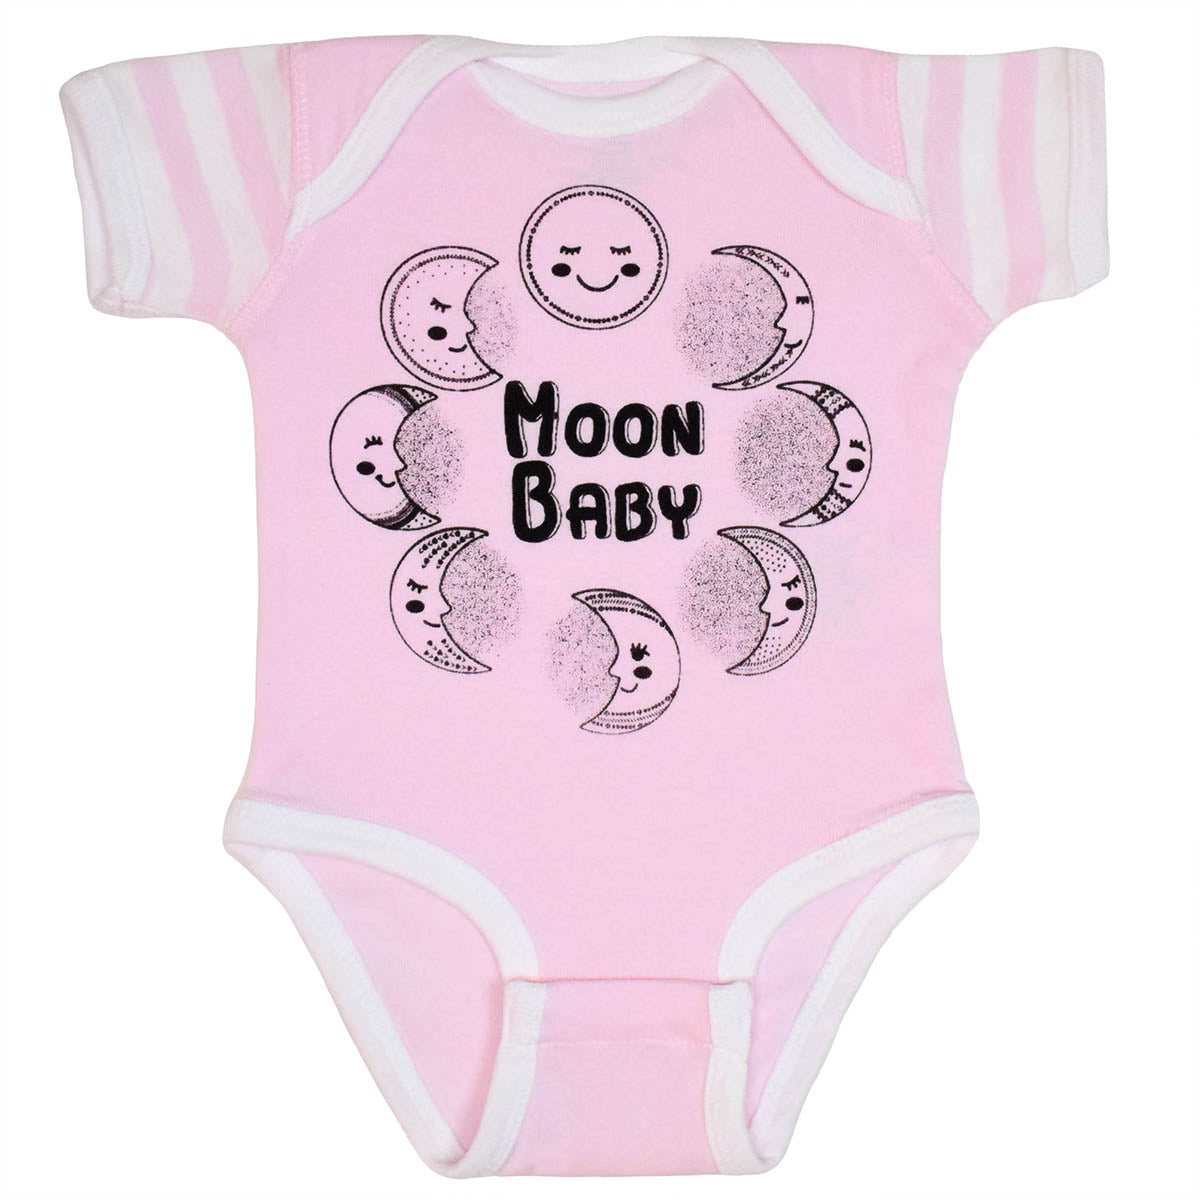 Moon Baby Bodysuit